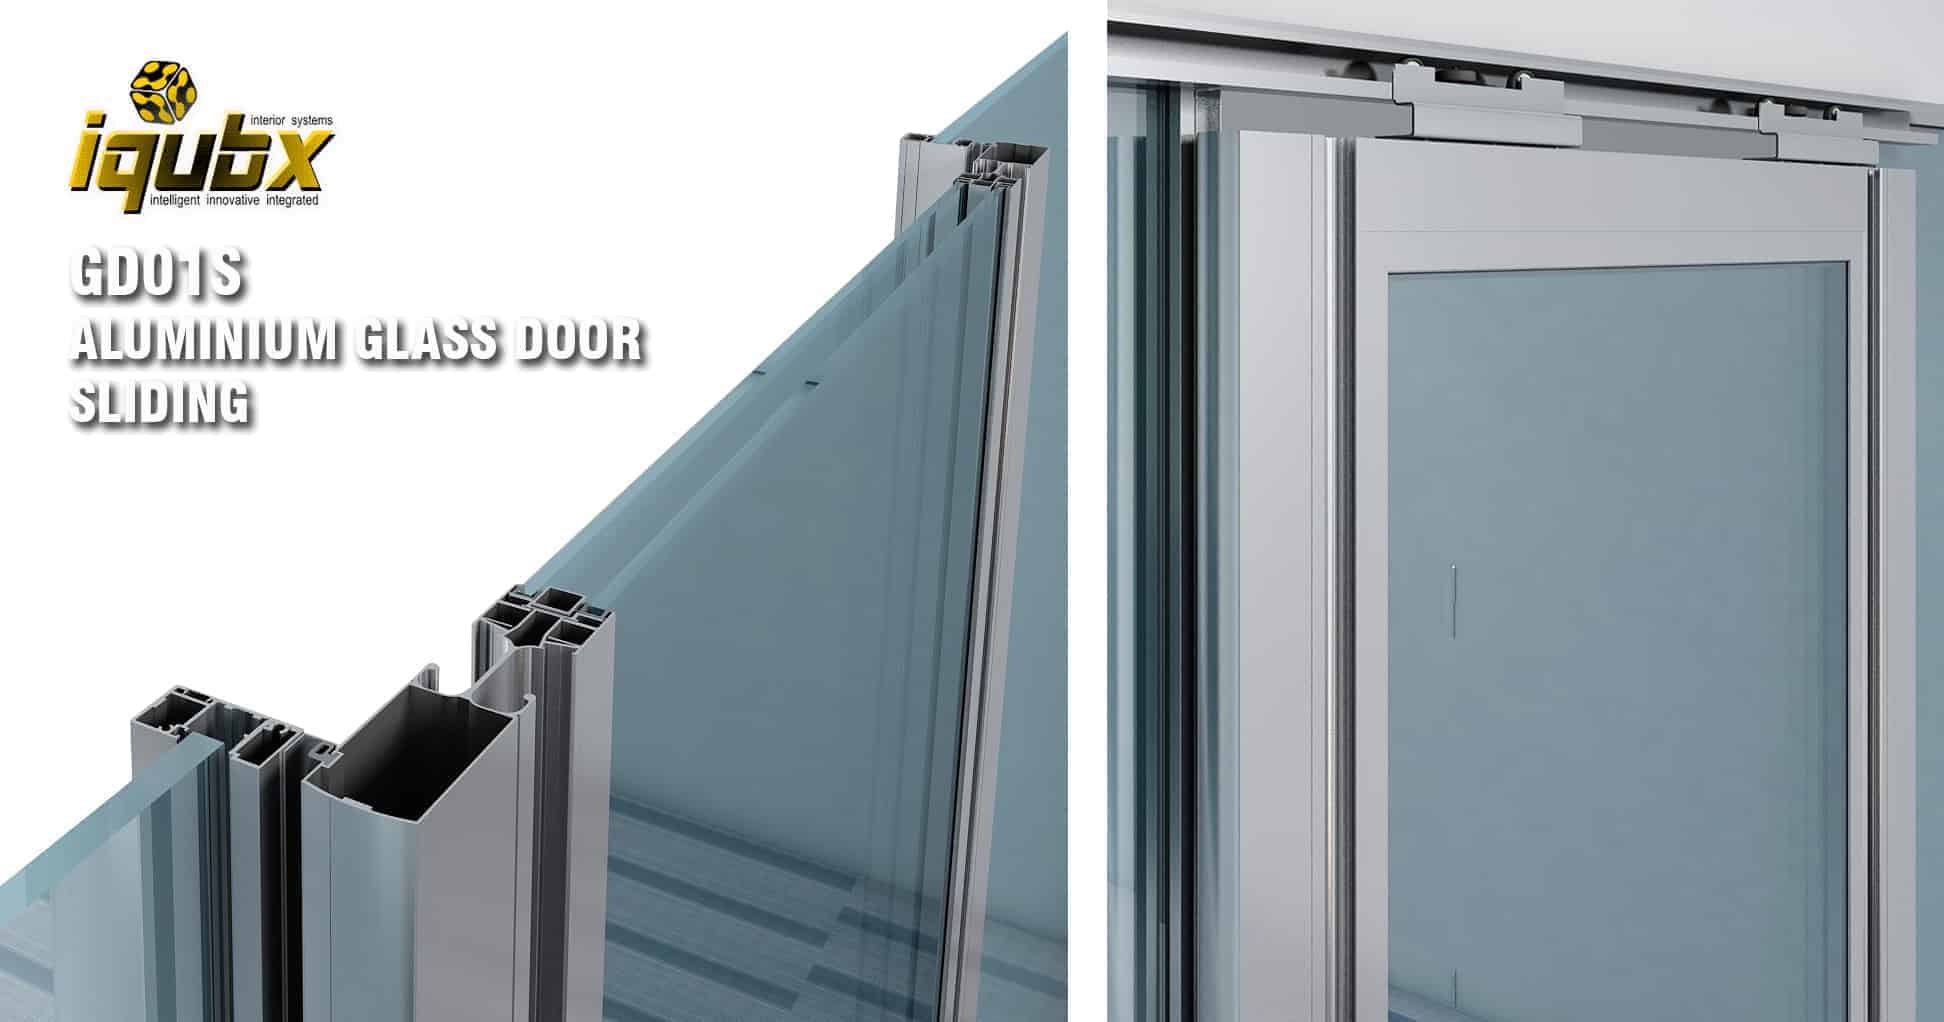 puzzel Scharnier Preek Aluminium Glass Doors - IQUBX